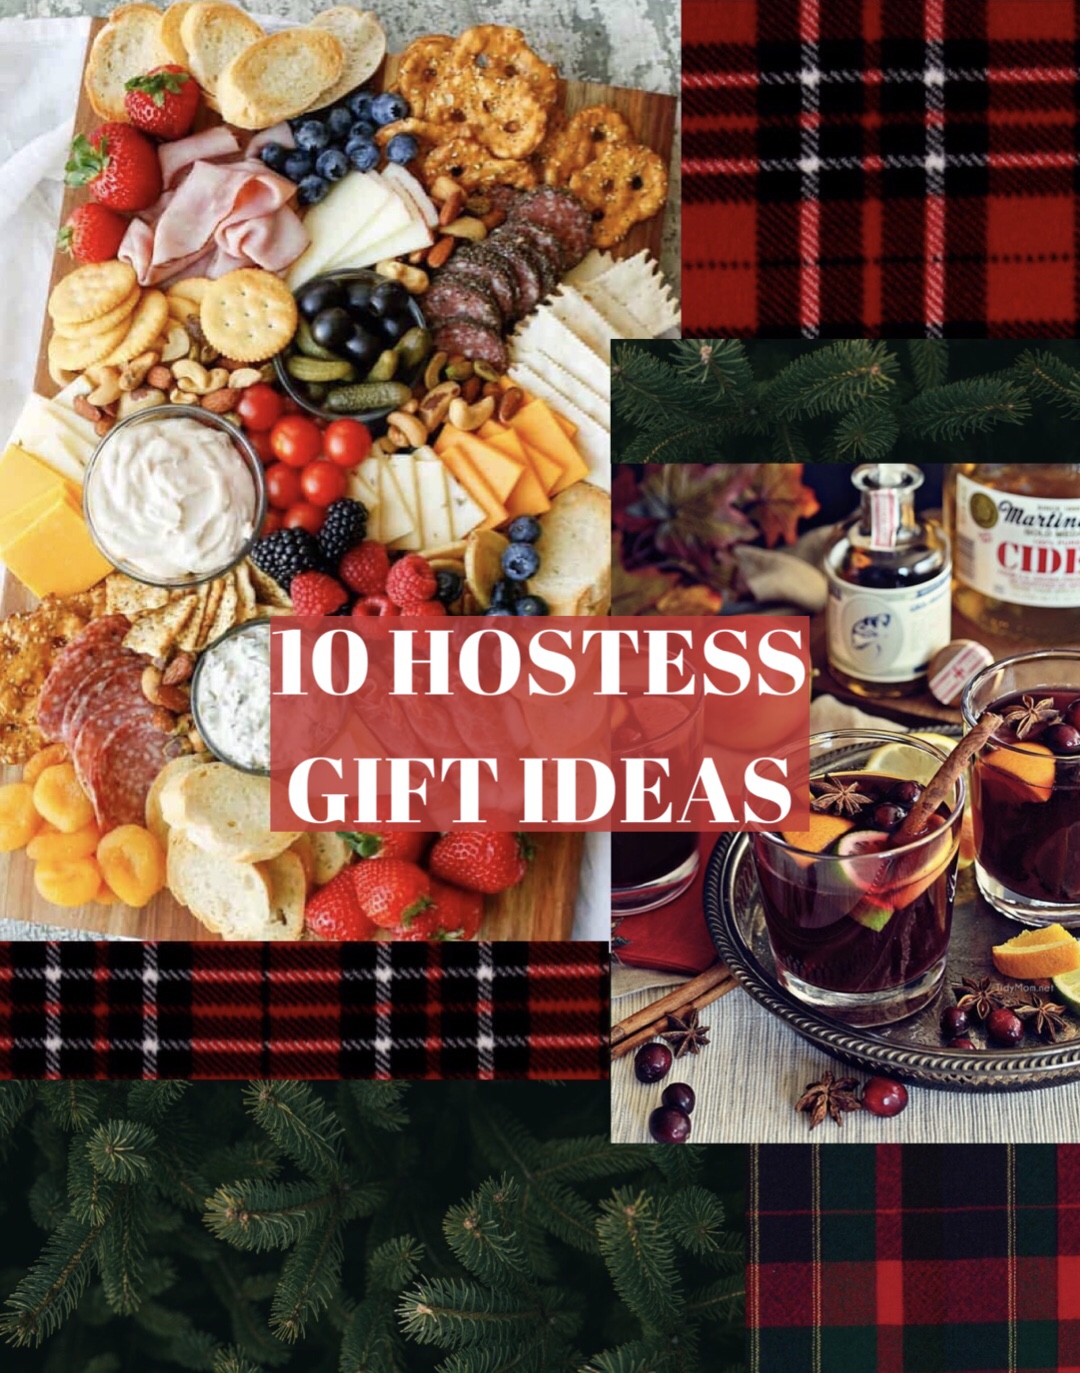 10 hostess gift ideas-1